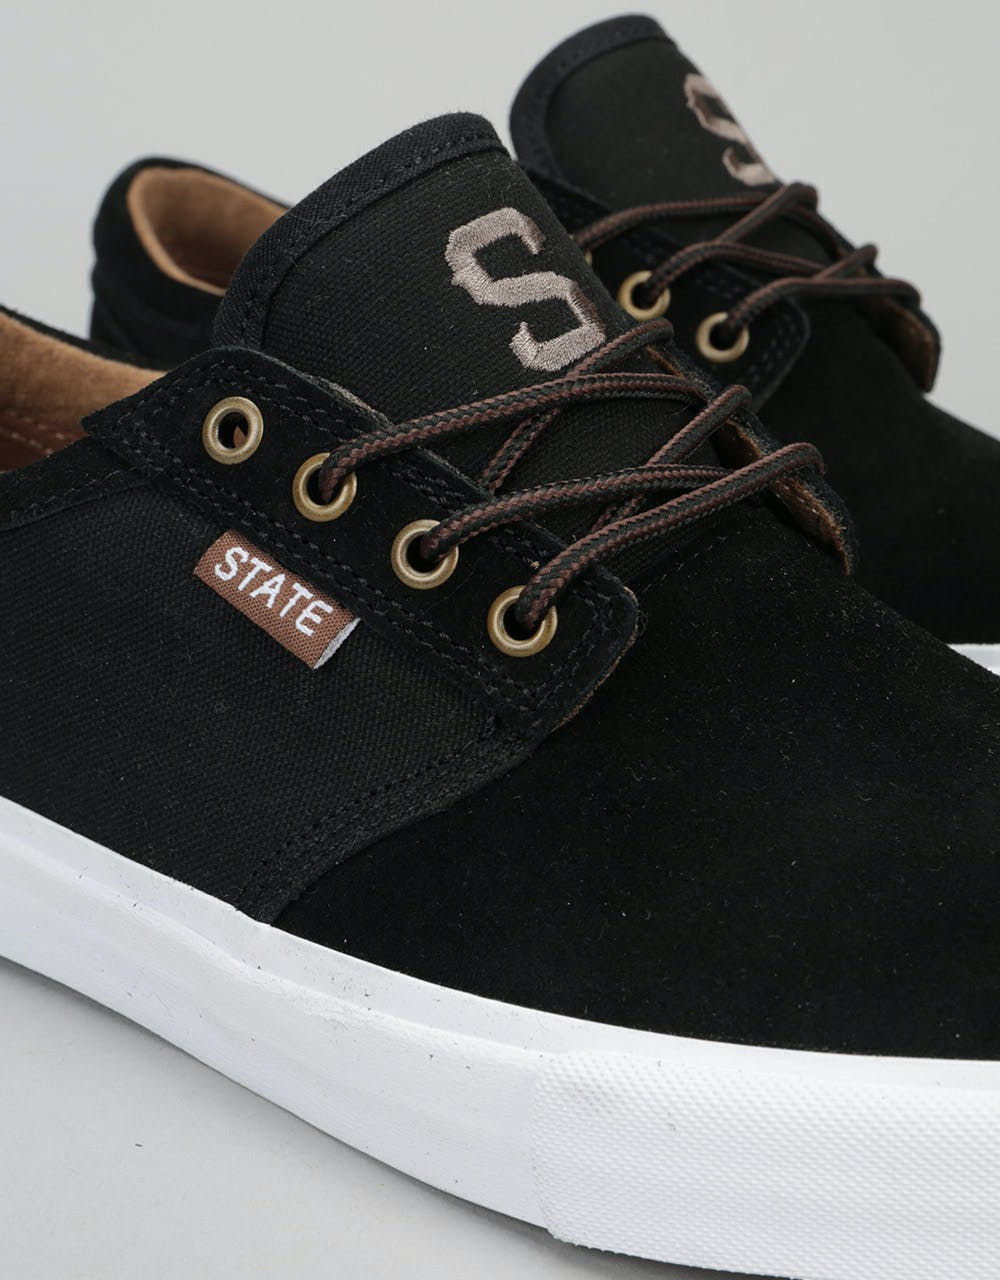 State Elgin Skate Shoes - Black/Brown Suede/Canvas